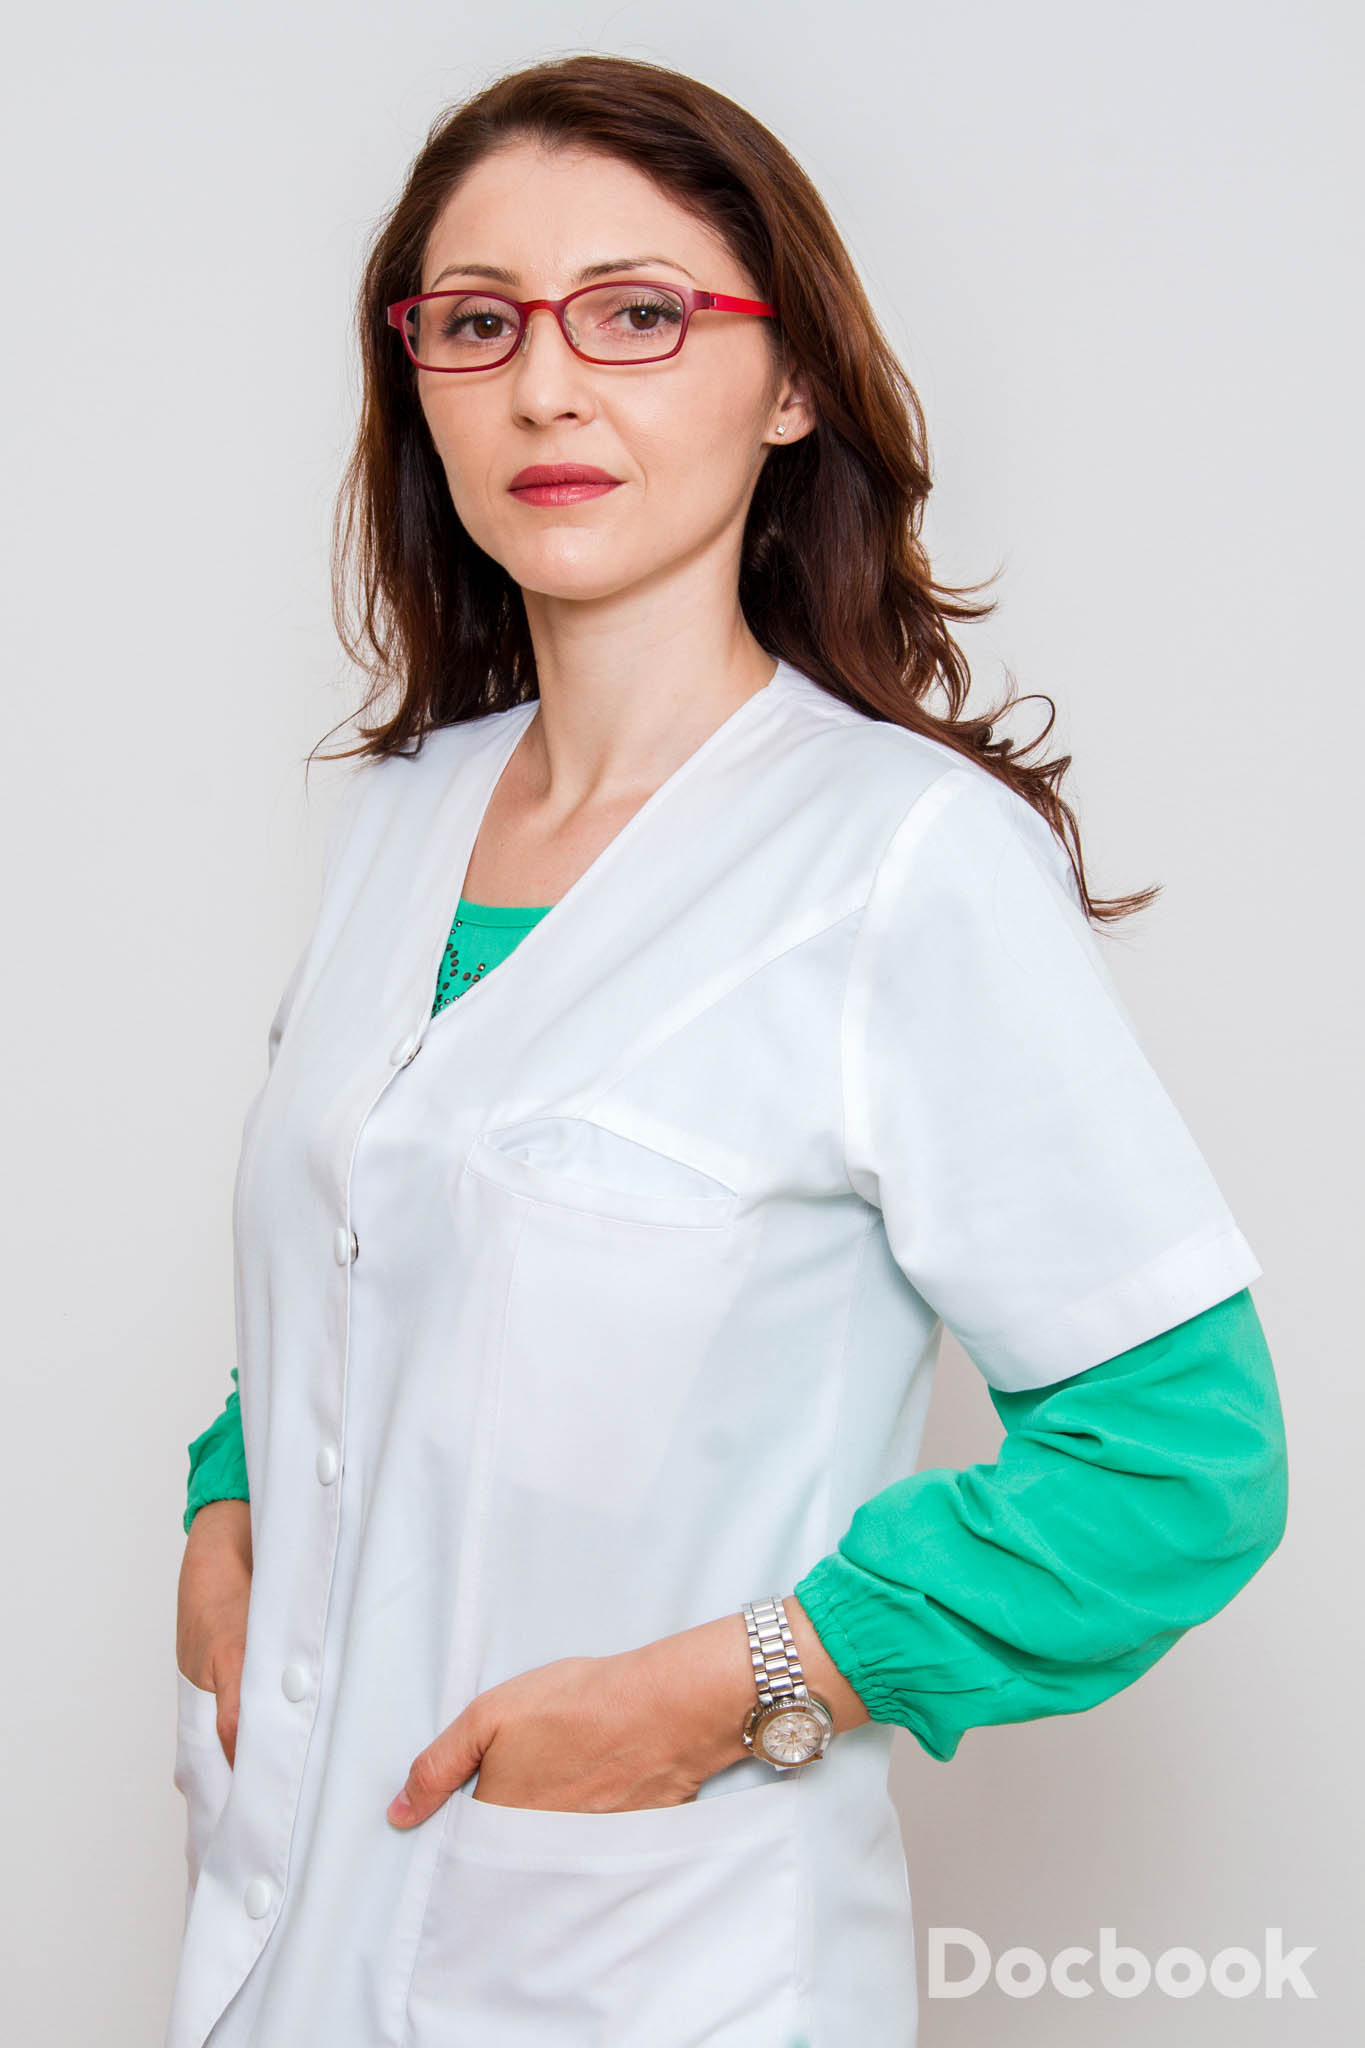 Dr. Emanuela Raluca Soare